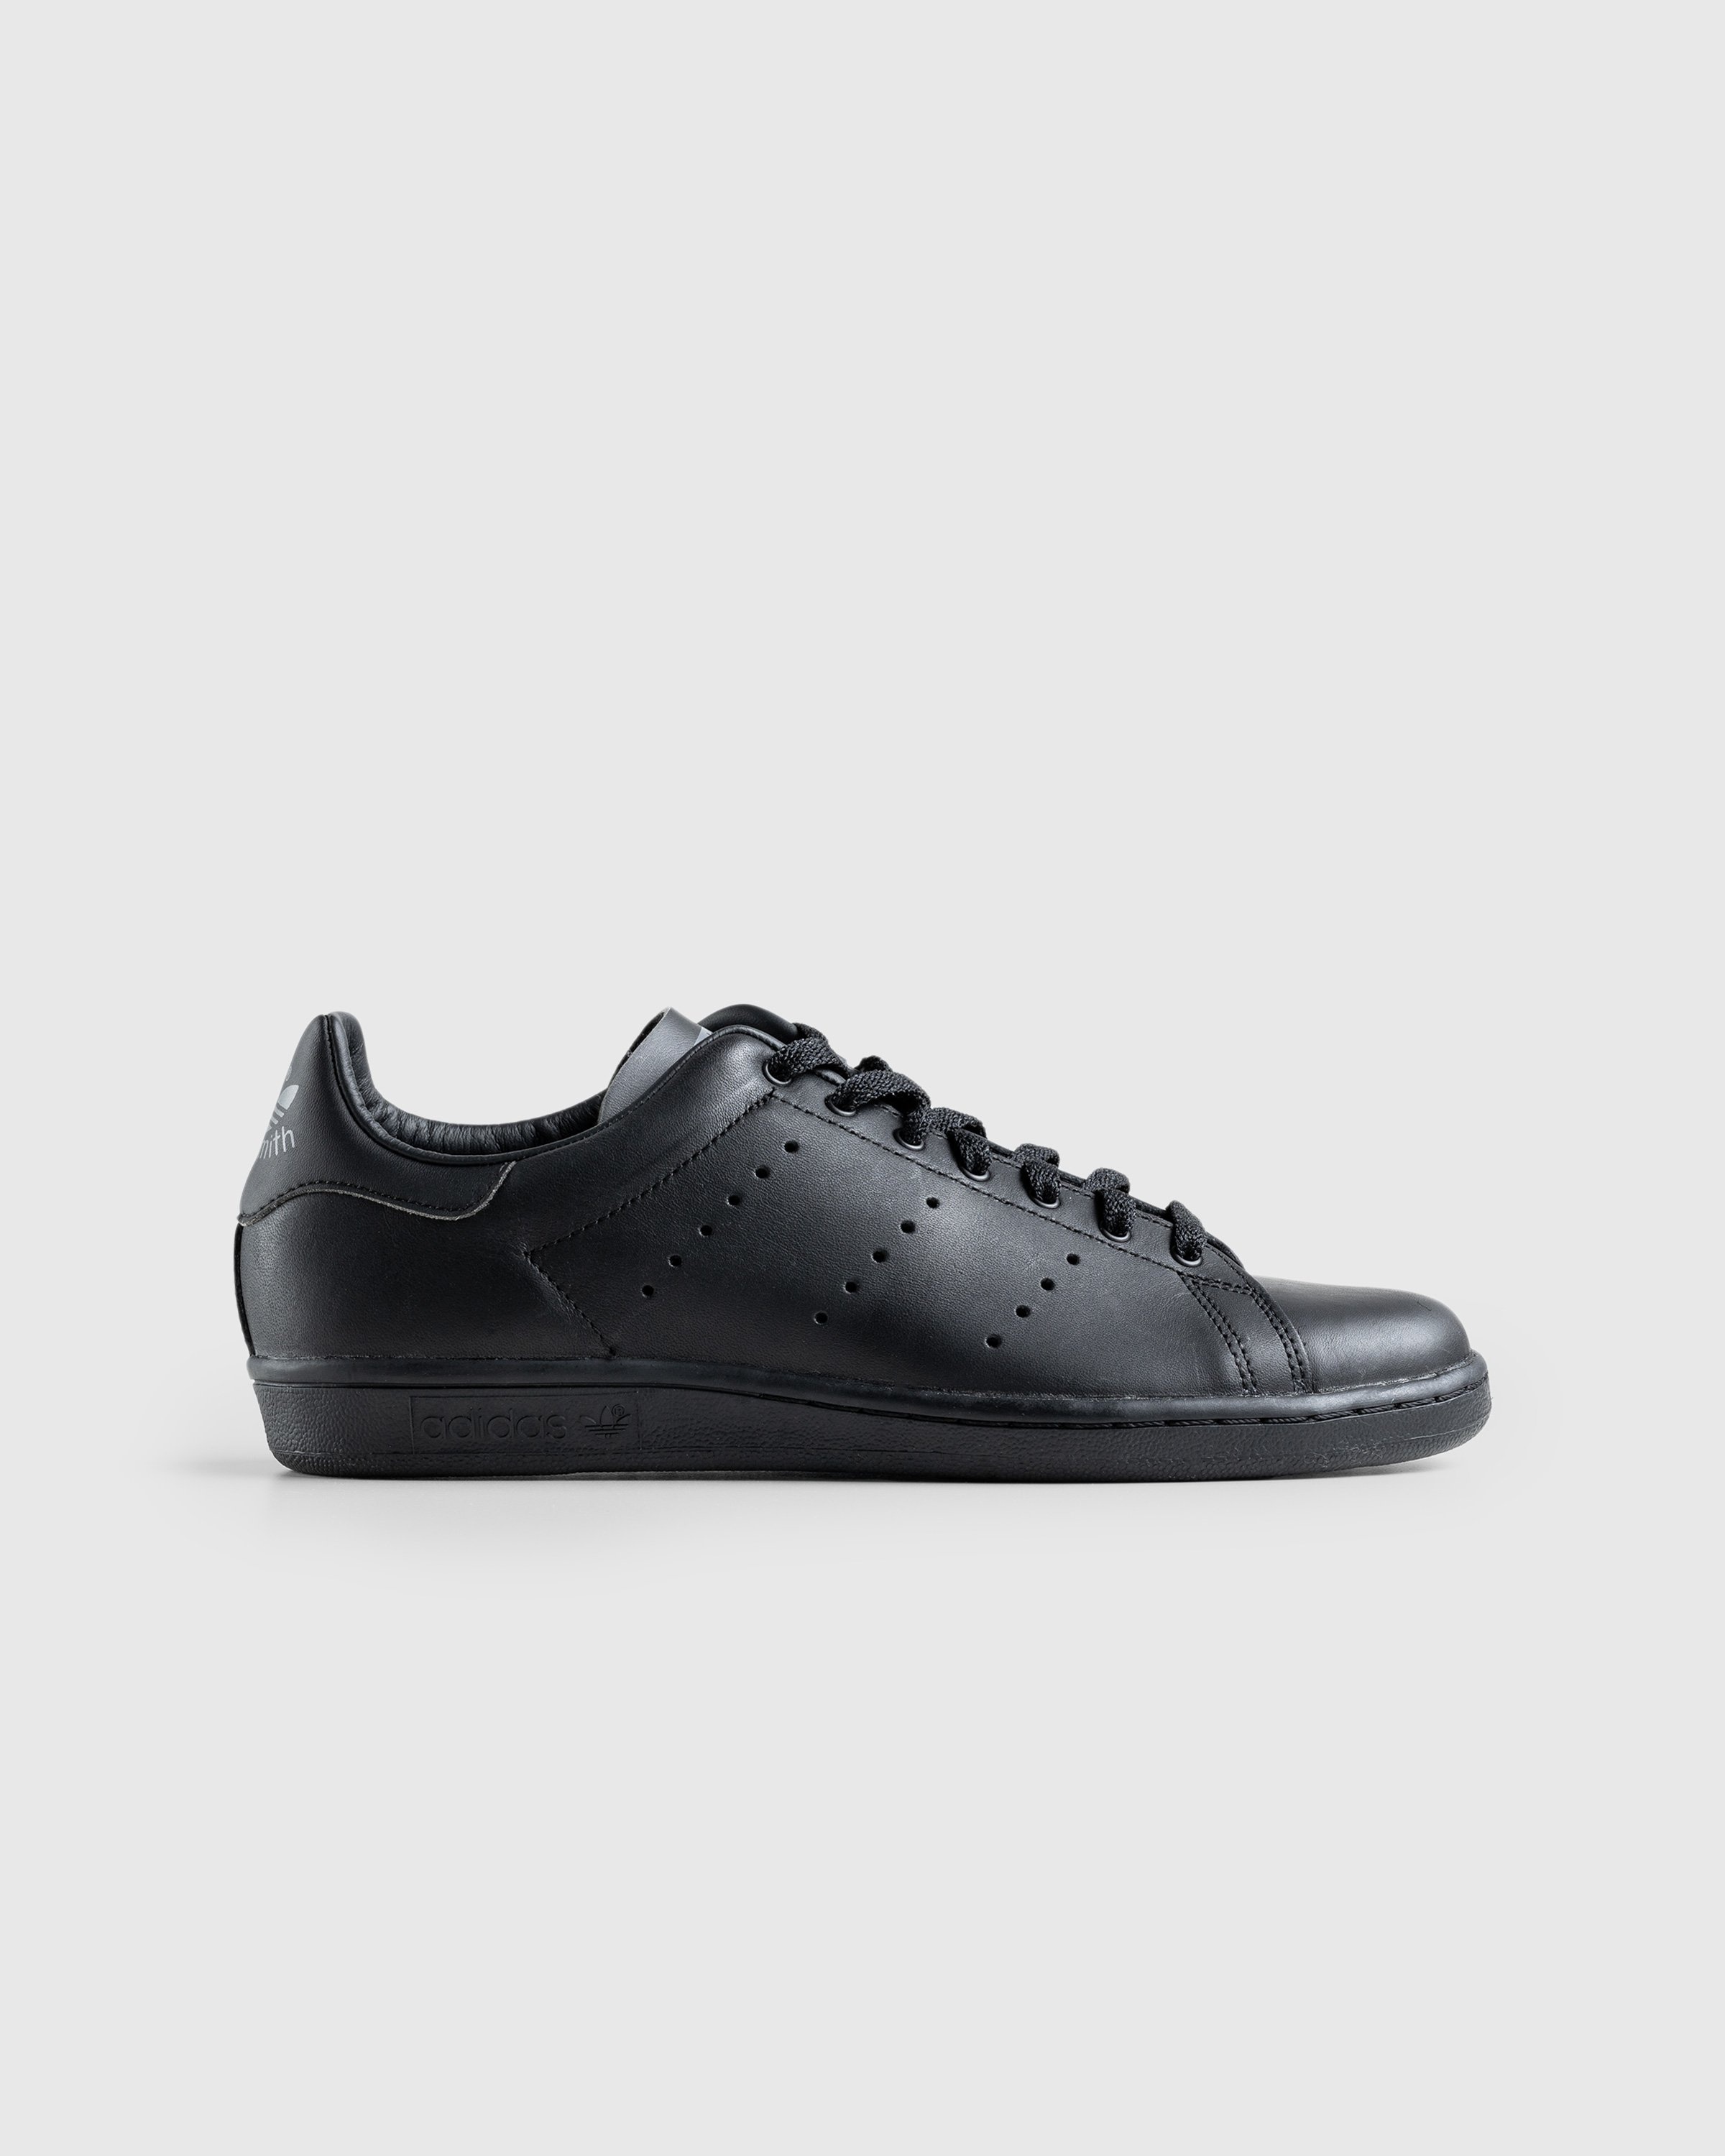 Adidas – Stan Smith 80s Black - Low Top Sneakers - Black - Image 1